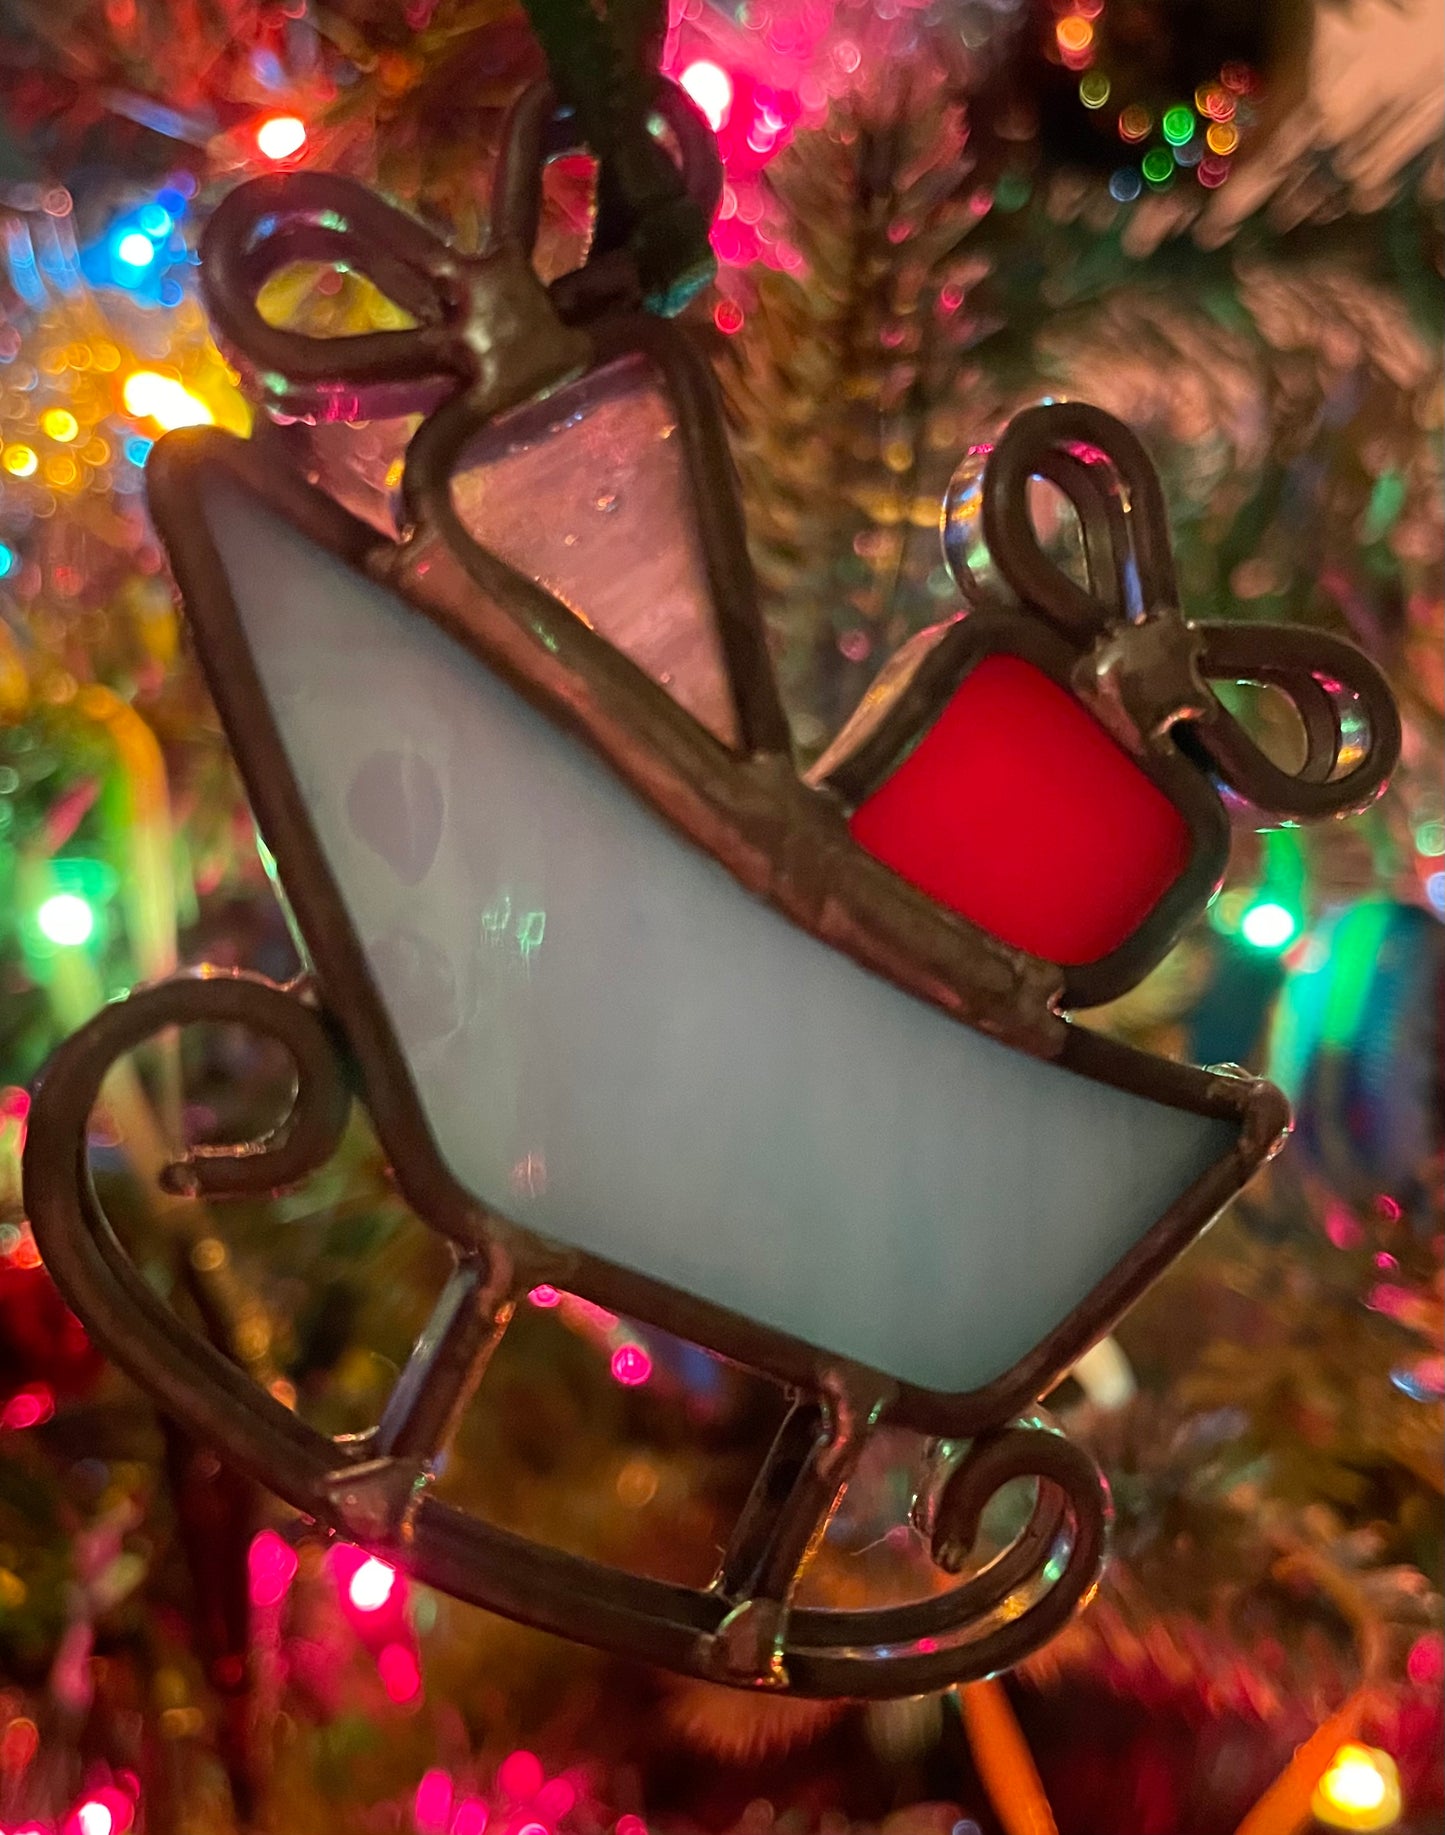 Sleigh Bells Ring - Christmas Ornament